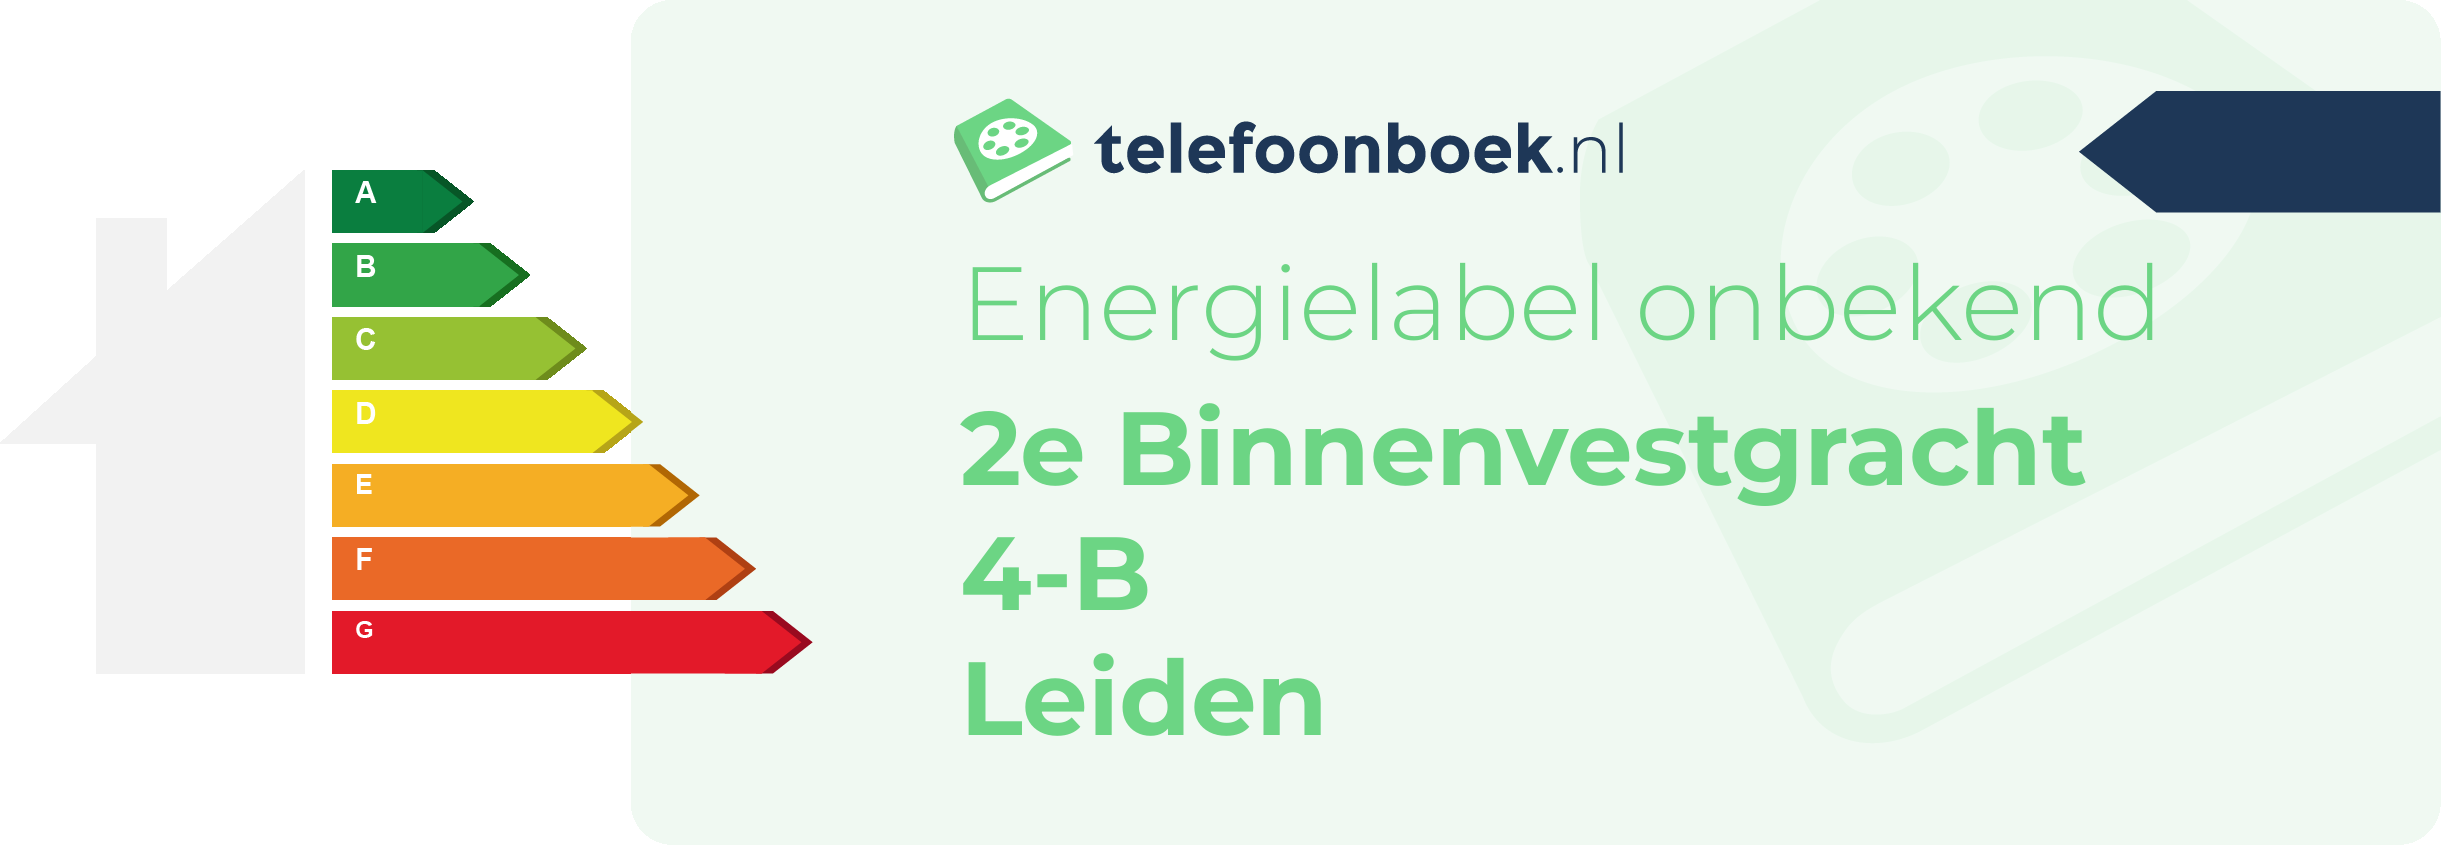 Energielabel 2e Binnenvestgracht 4-B Leiden